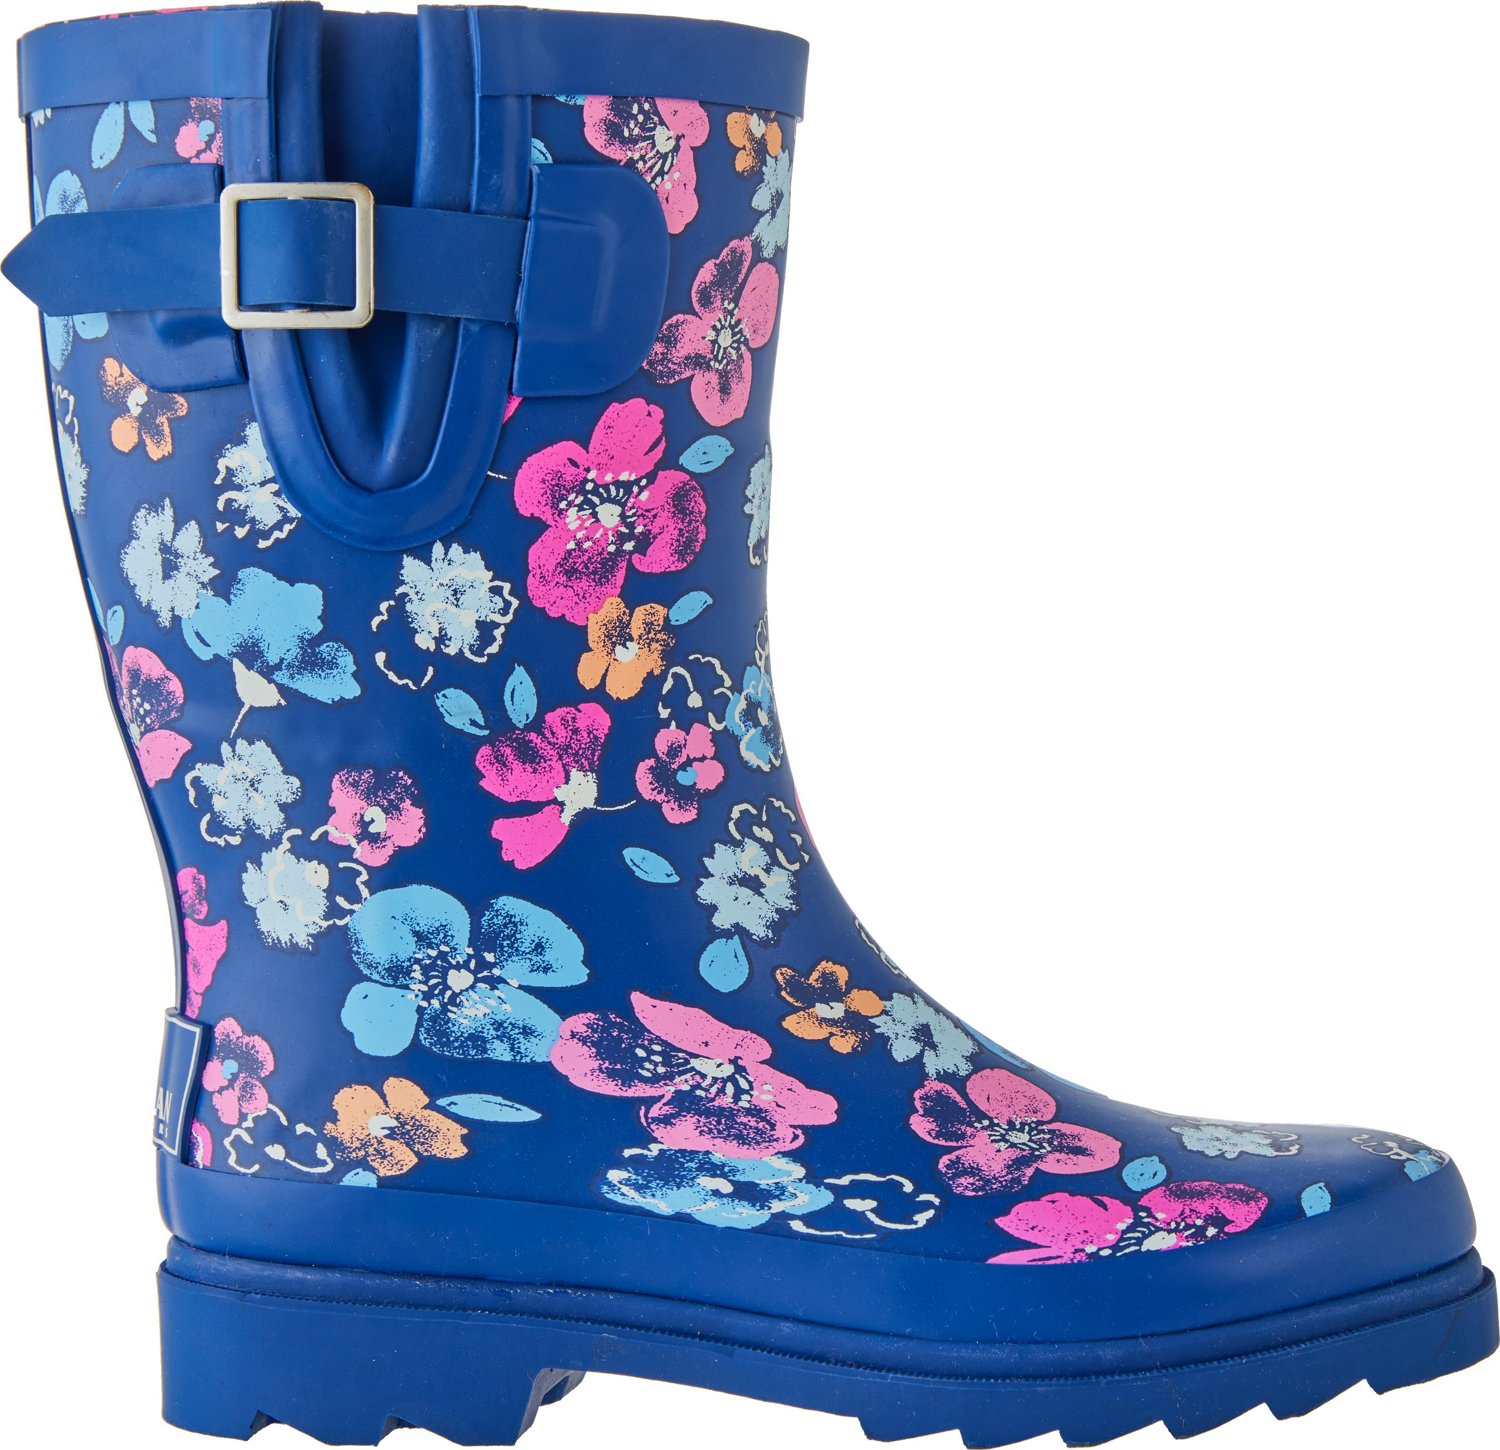 Magellan Outdoors Women's Floral Rubber Boots | Academy